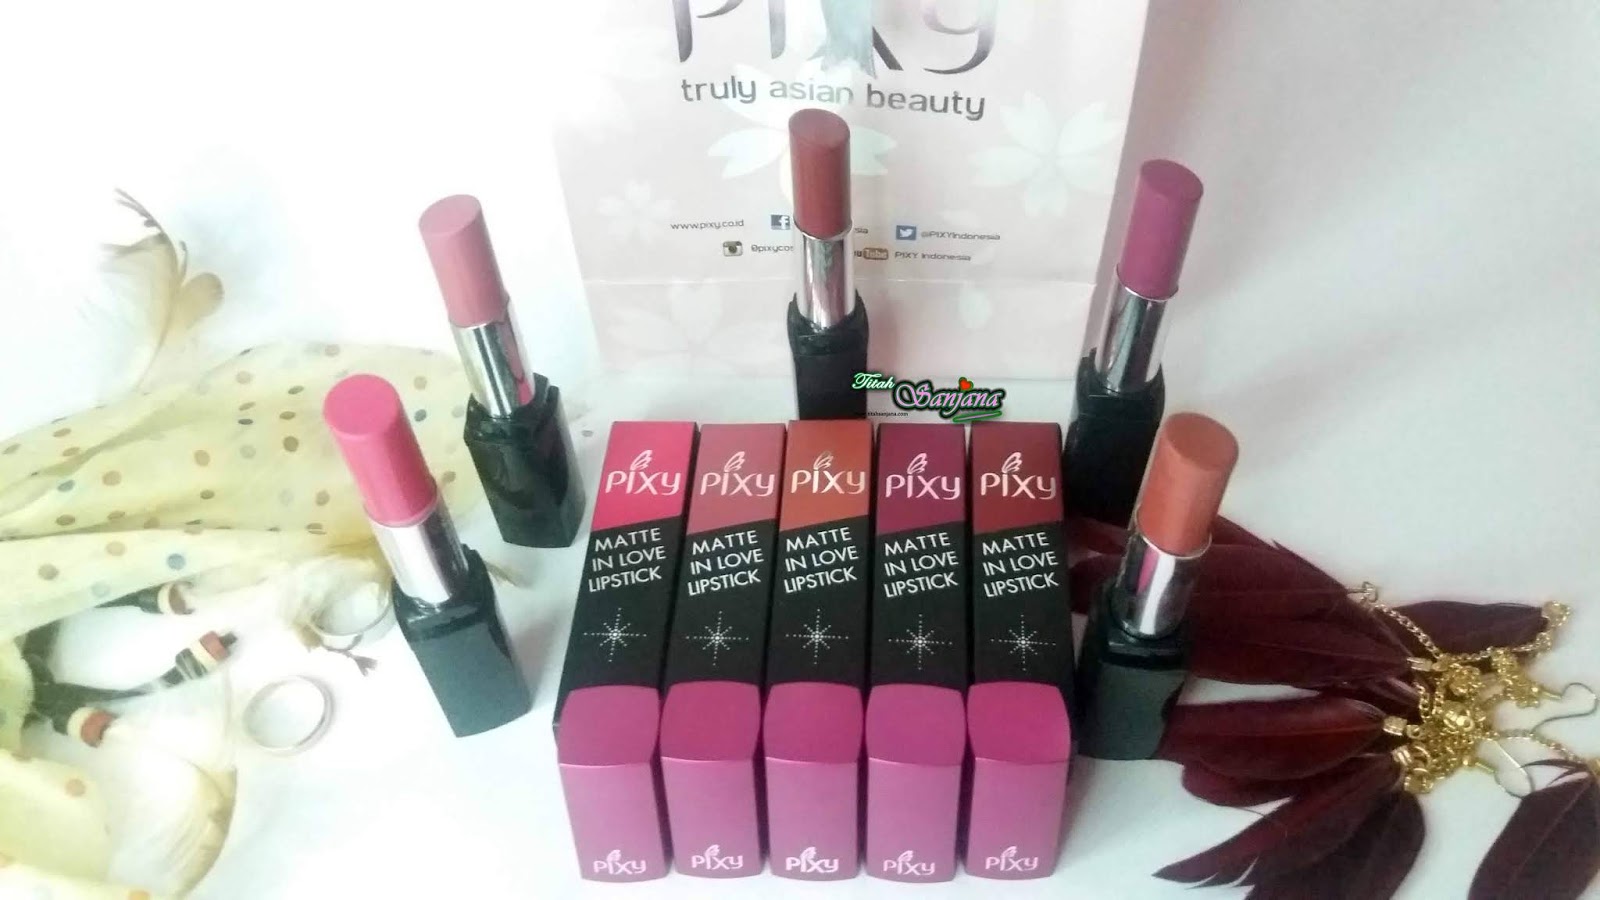 Pixy matte in love lipstick shade 210,310,505,211,106.